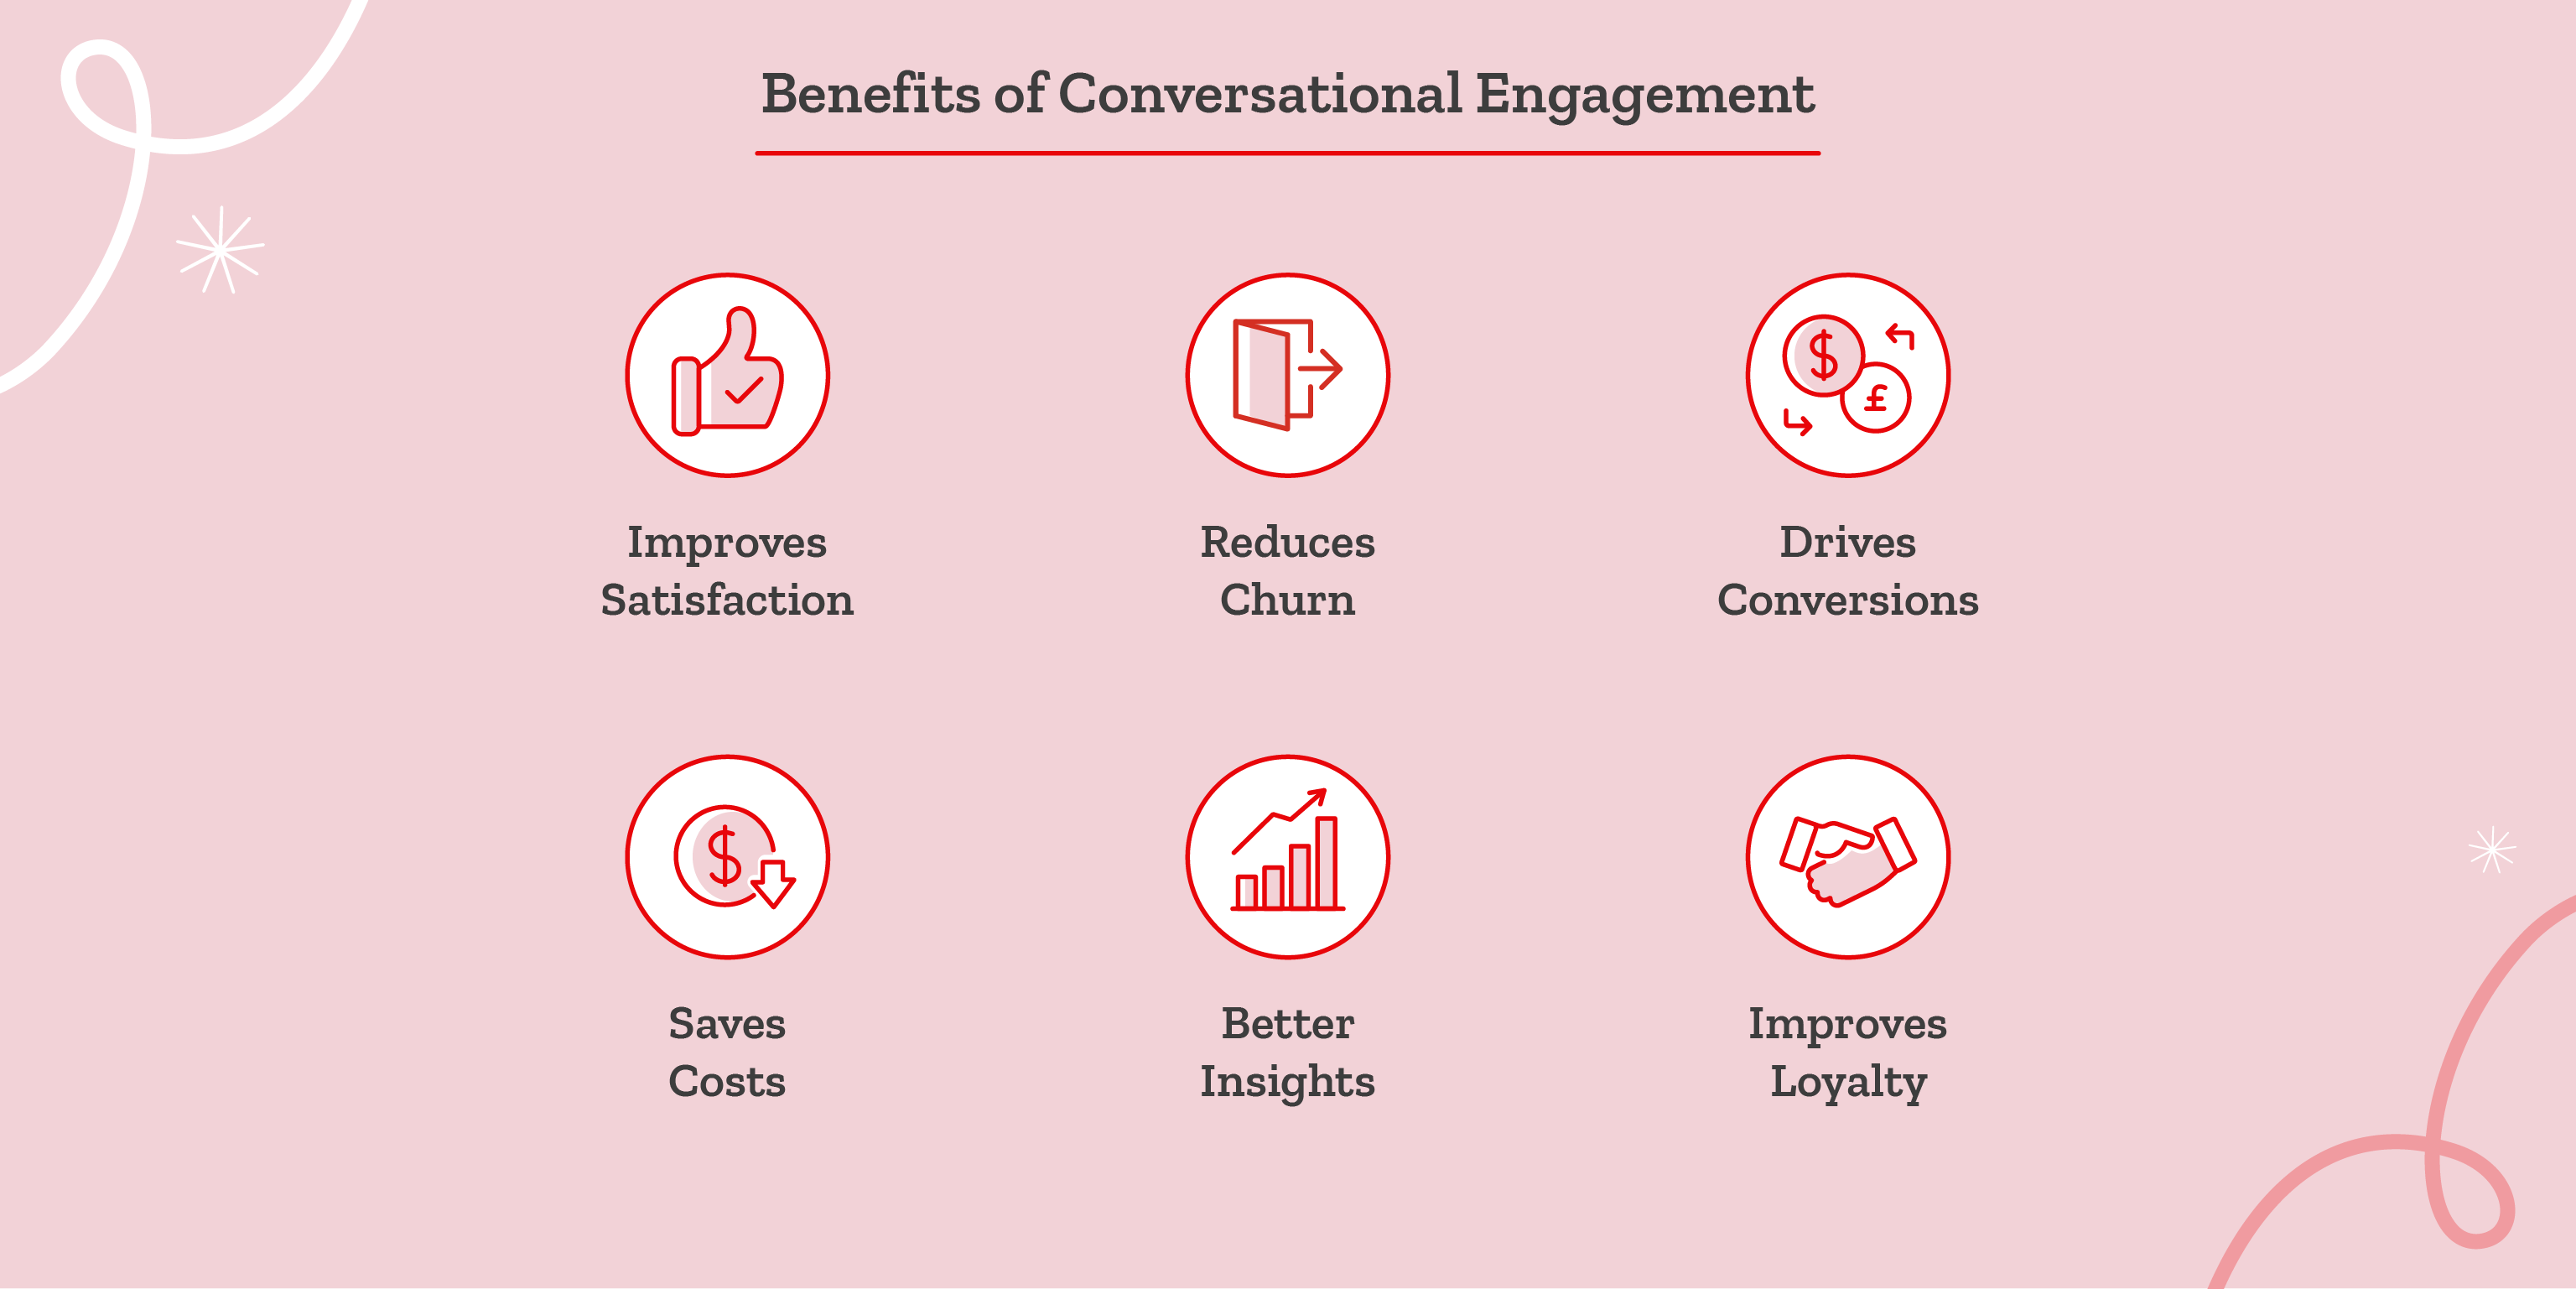 Conversational Engagement benefits